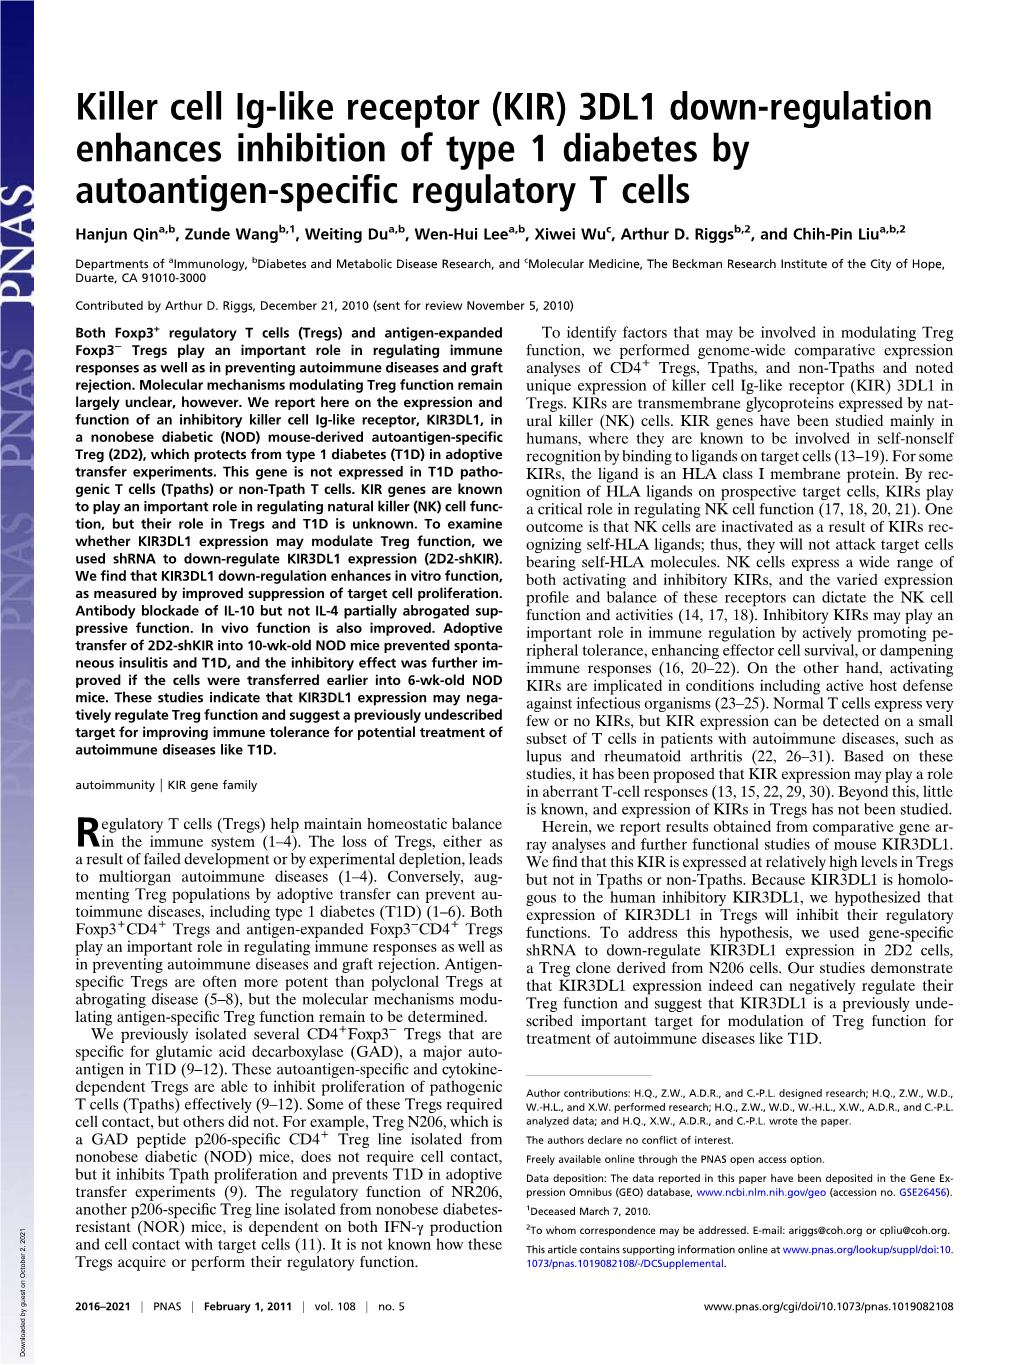 KIR) 3DL1 Down-Regulation Enhances Inhibition of Type 1 Diabetes by Autoantigen-Speciﬁc Regulatory T Cells